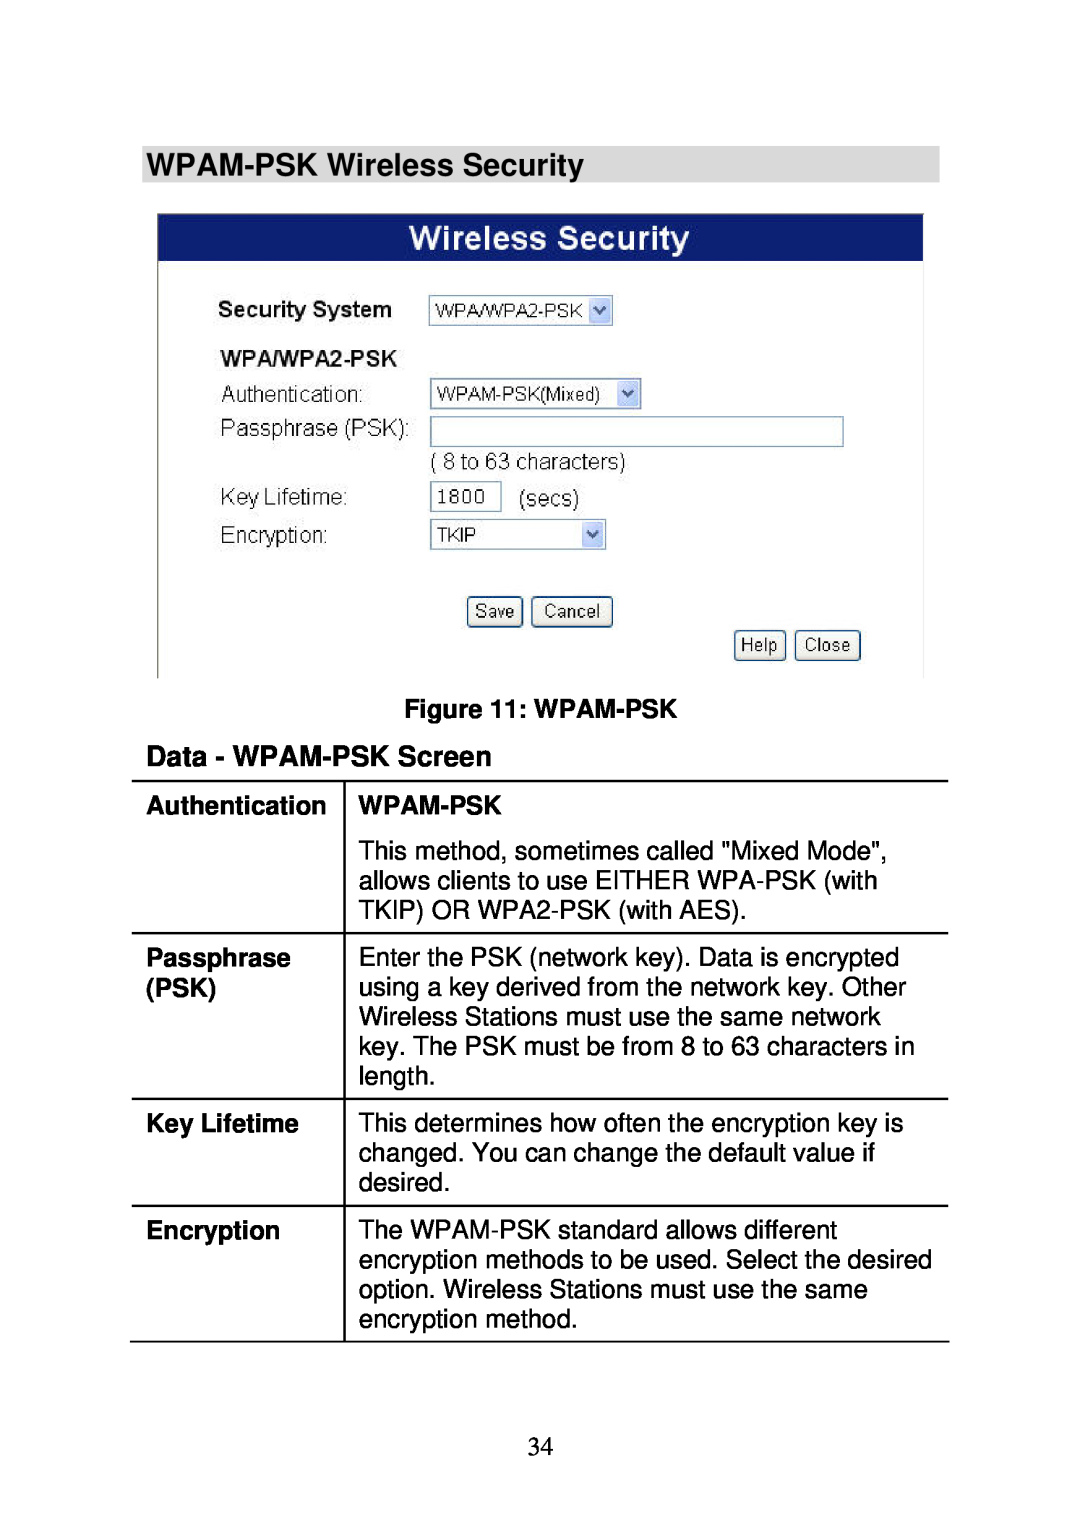 3Com WBR-6000 WPAM-PSK Wireless Security, Data - WPAM-PSK Screen, Wpam-Psk, Authentication, Passphrase, Key Lifetime 